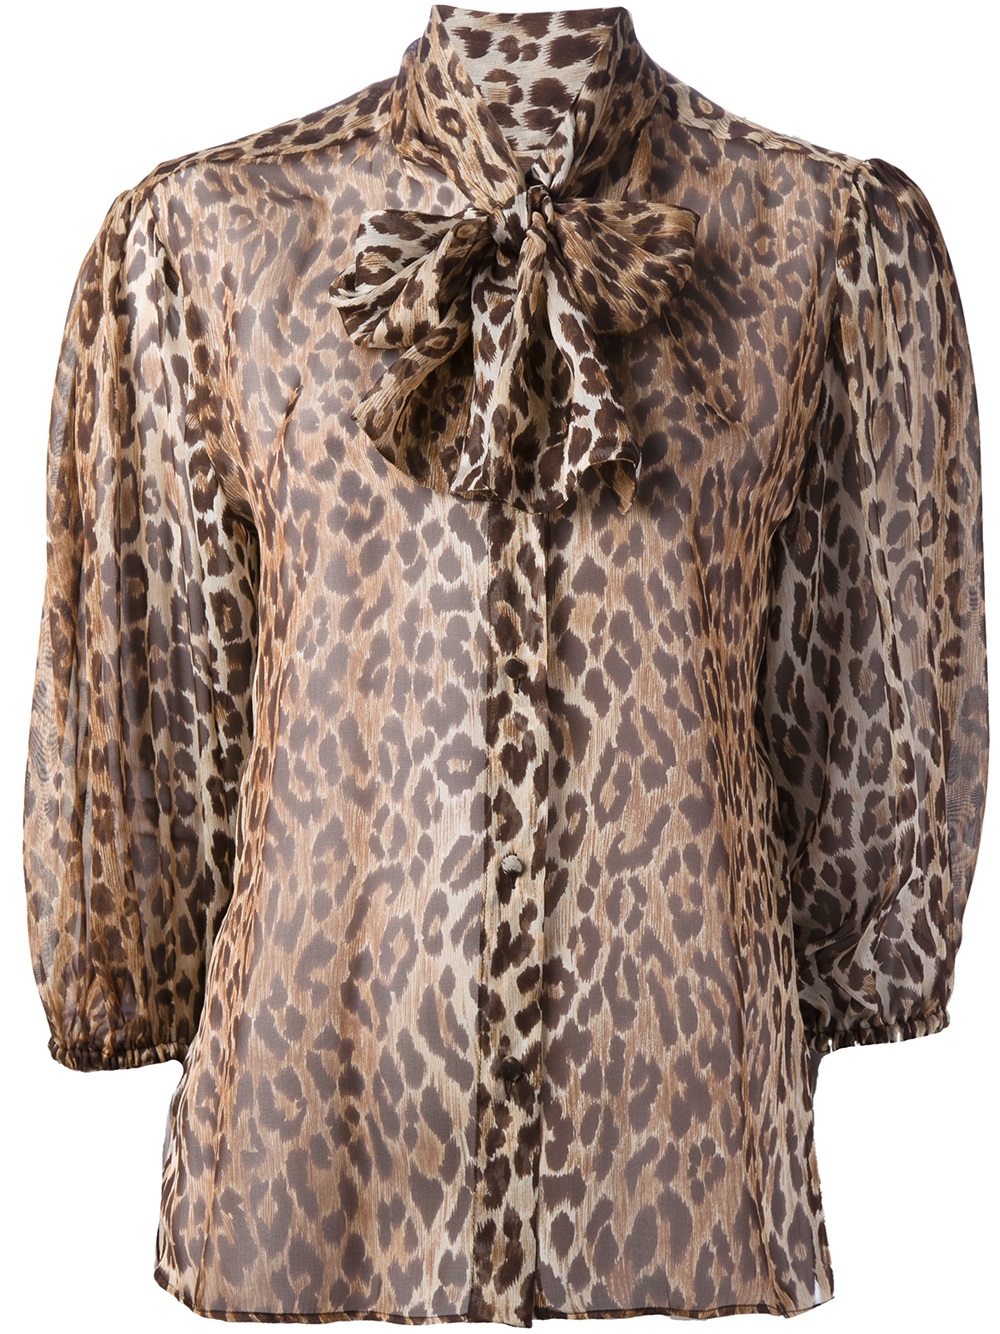 Lyst - Dolce & Gabbana Leopard Print Blouse